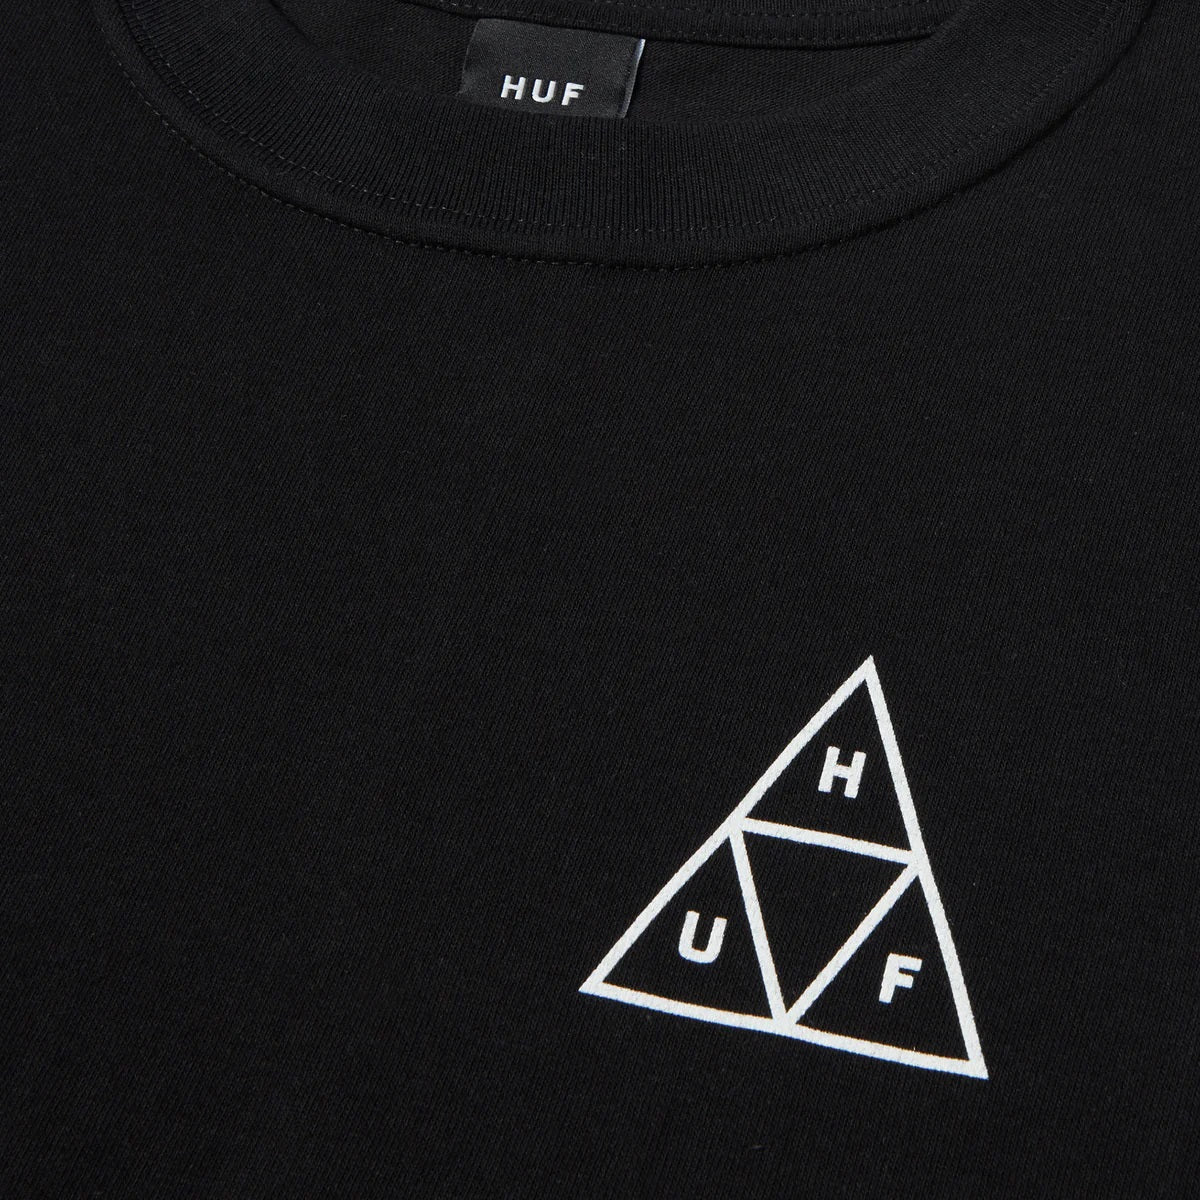 Huf Huf Set Triangle Tee Black T-Shirt